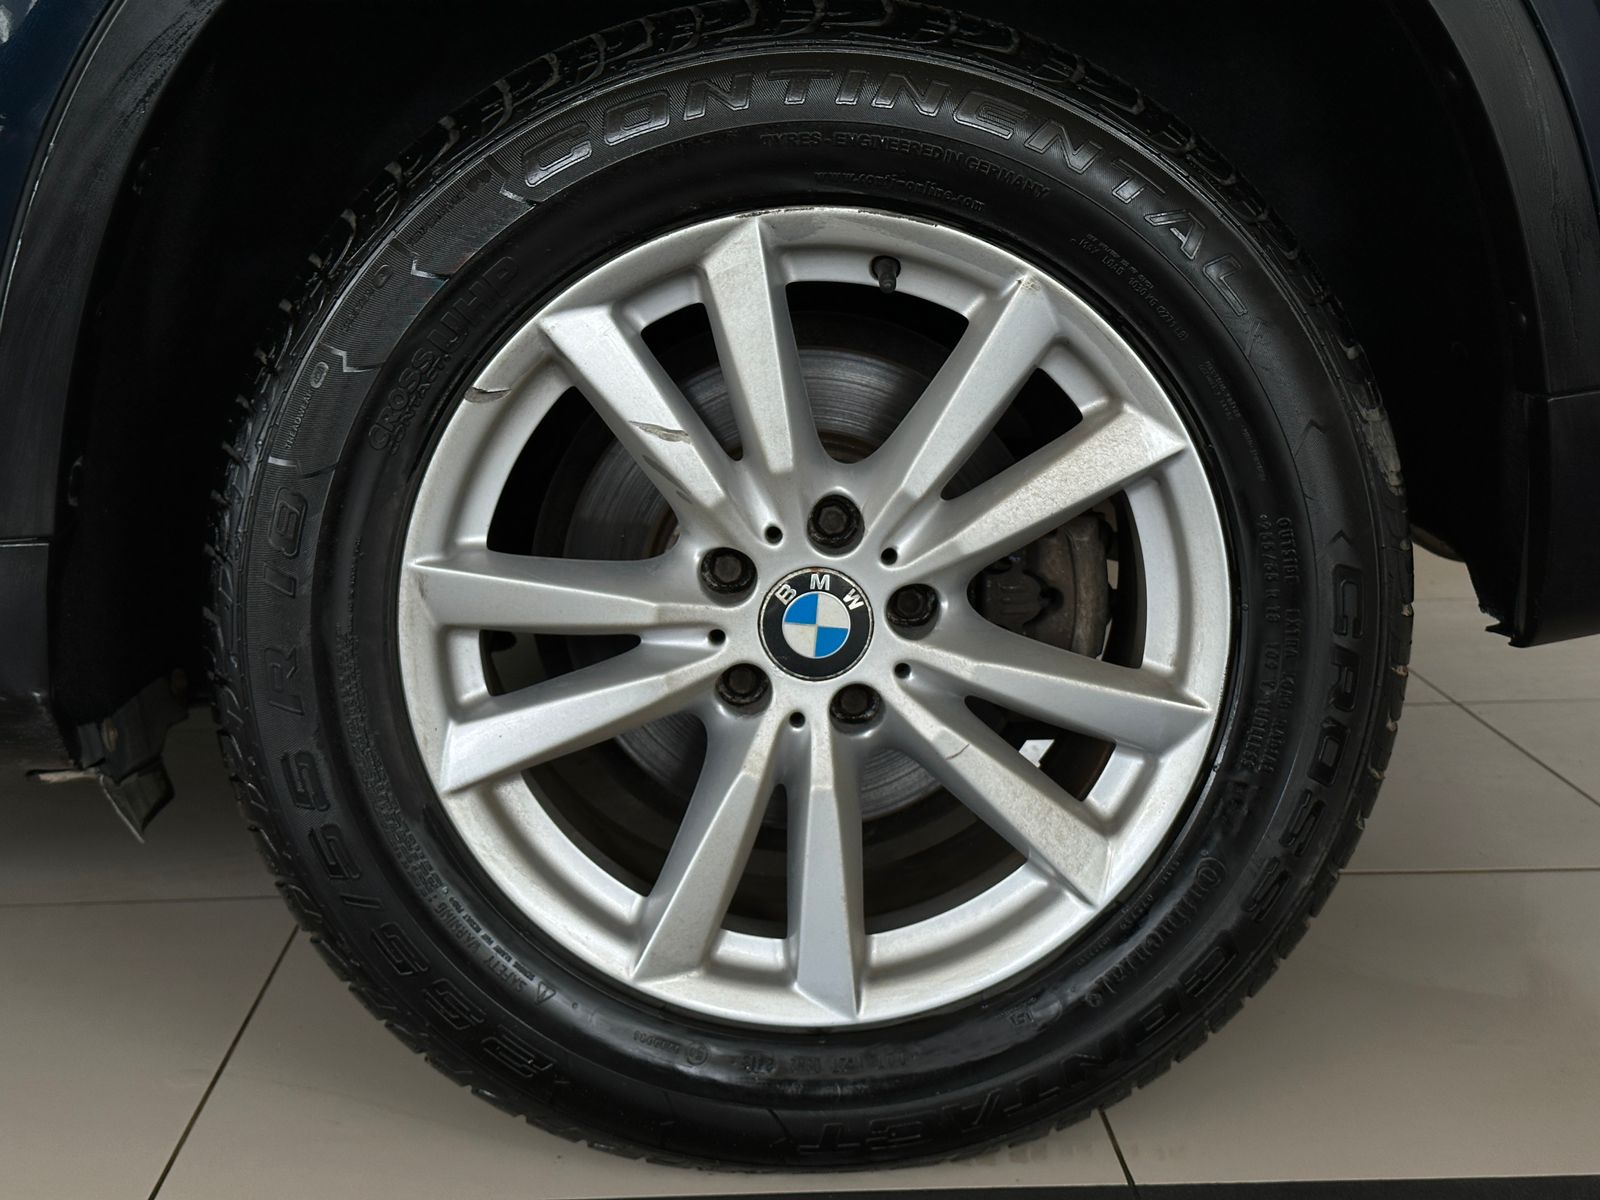 BMW X5 - 2015 model - 91439 kms wheel